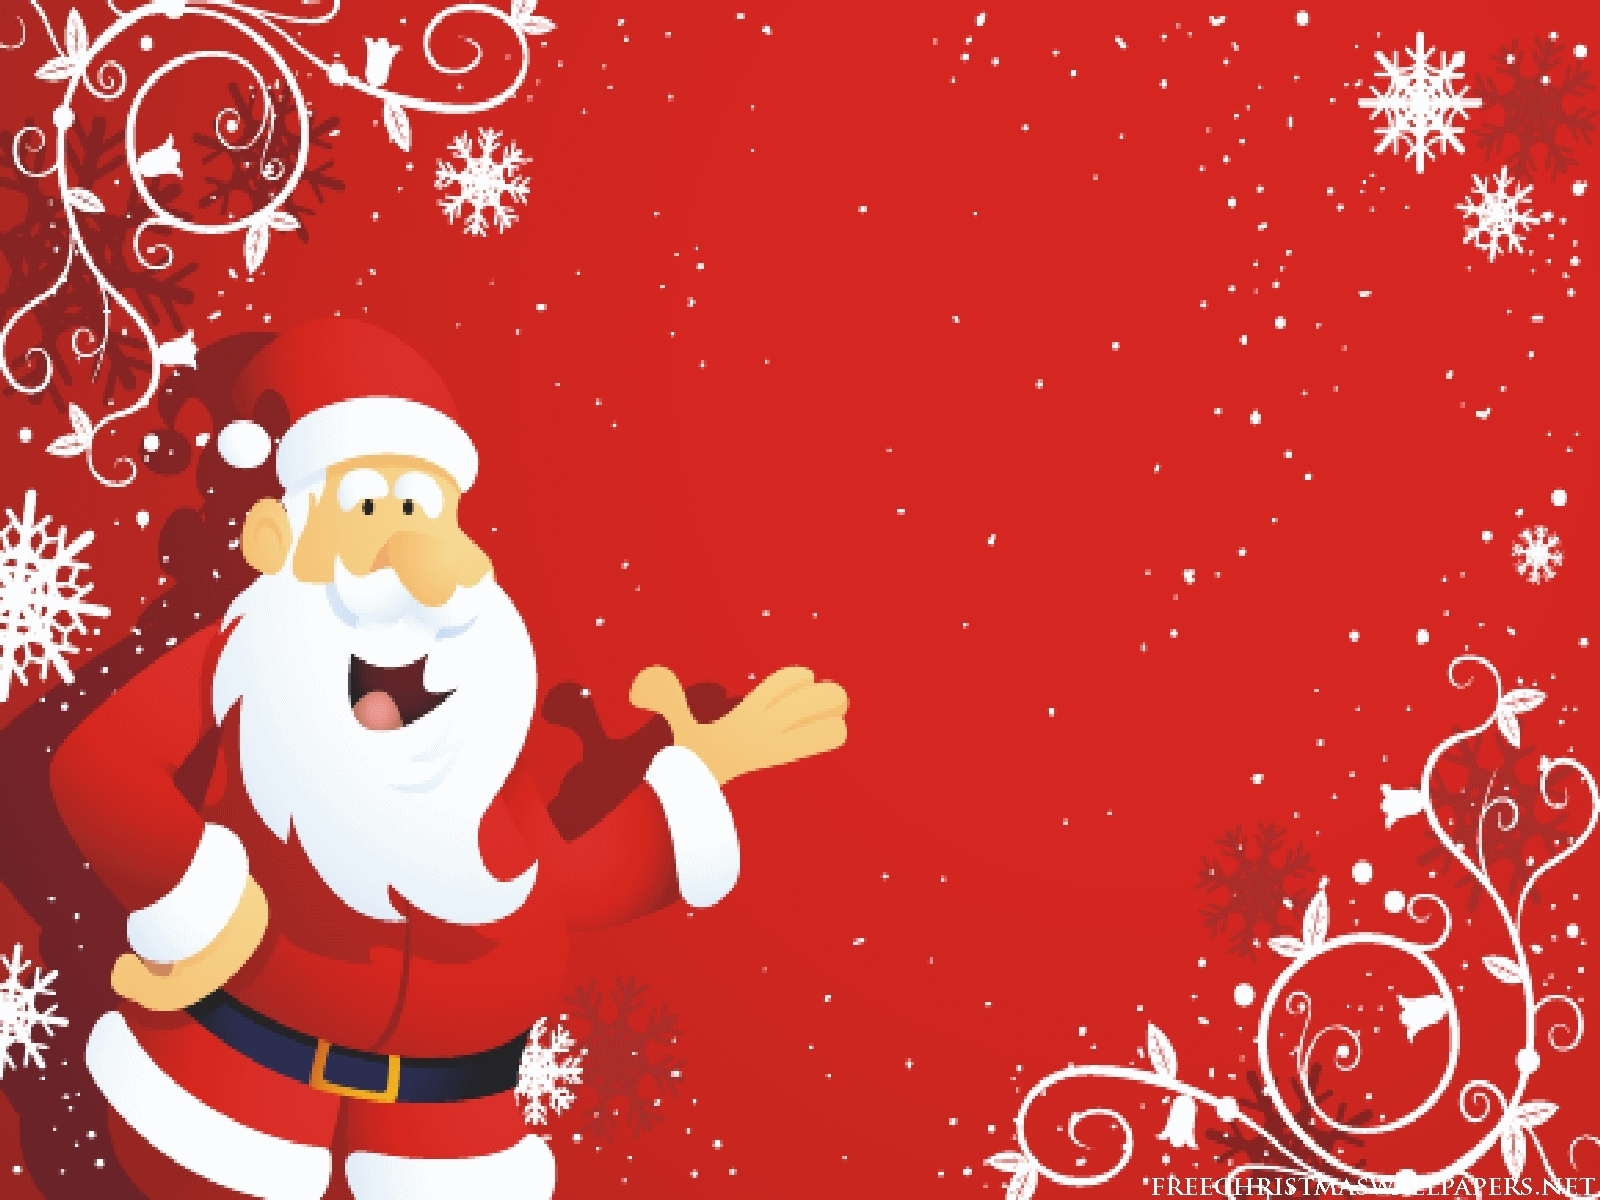 Christmas Image Santa Claus HD Wallpaper And Background Photos